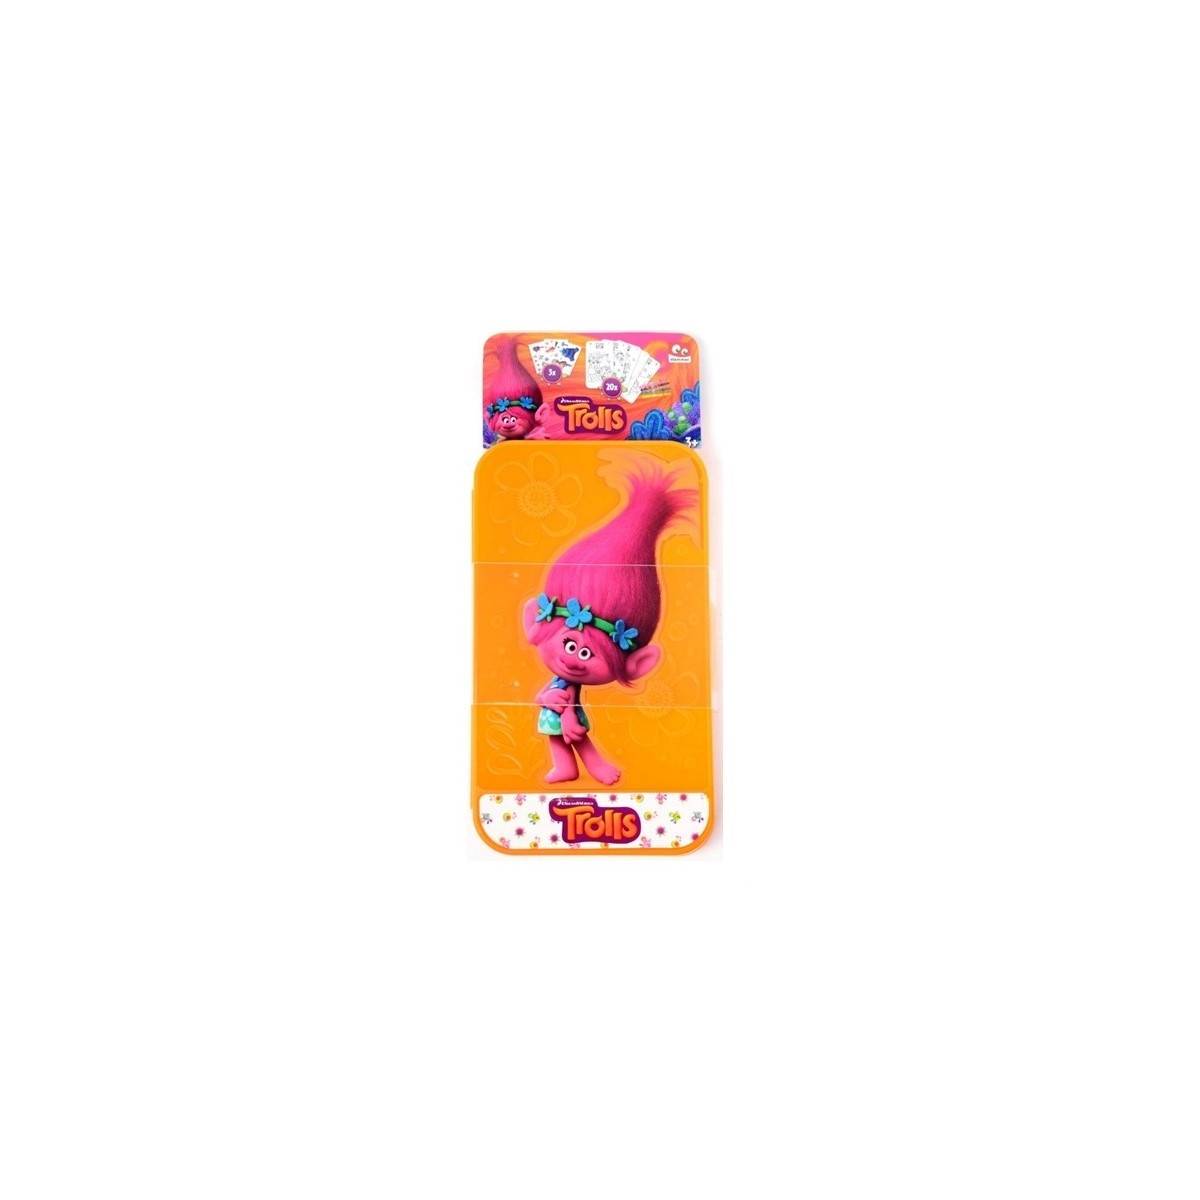 Trolls Poppy - Etui de coloriage - Crayons, feuillets et stickers